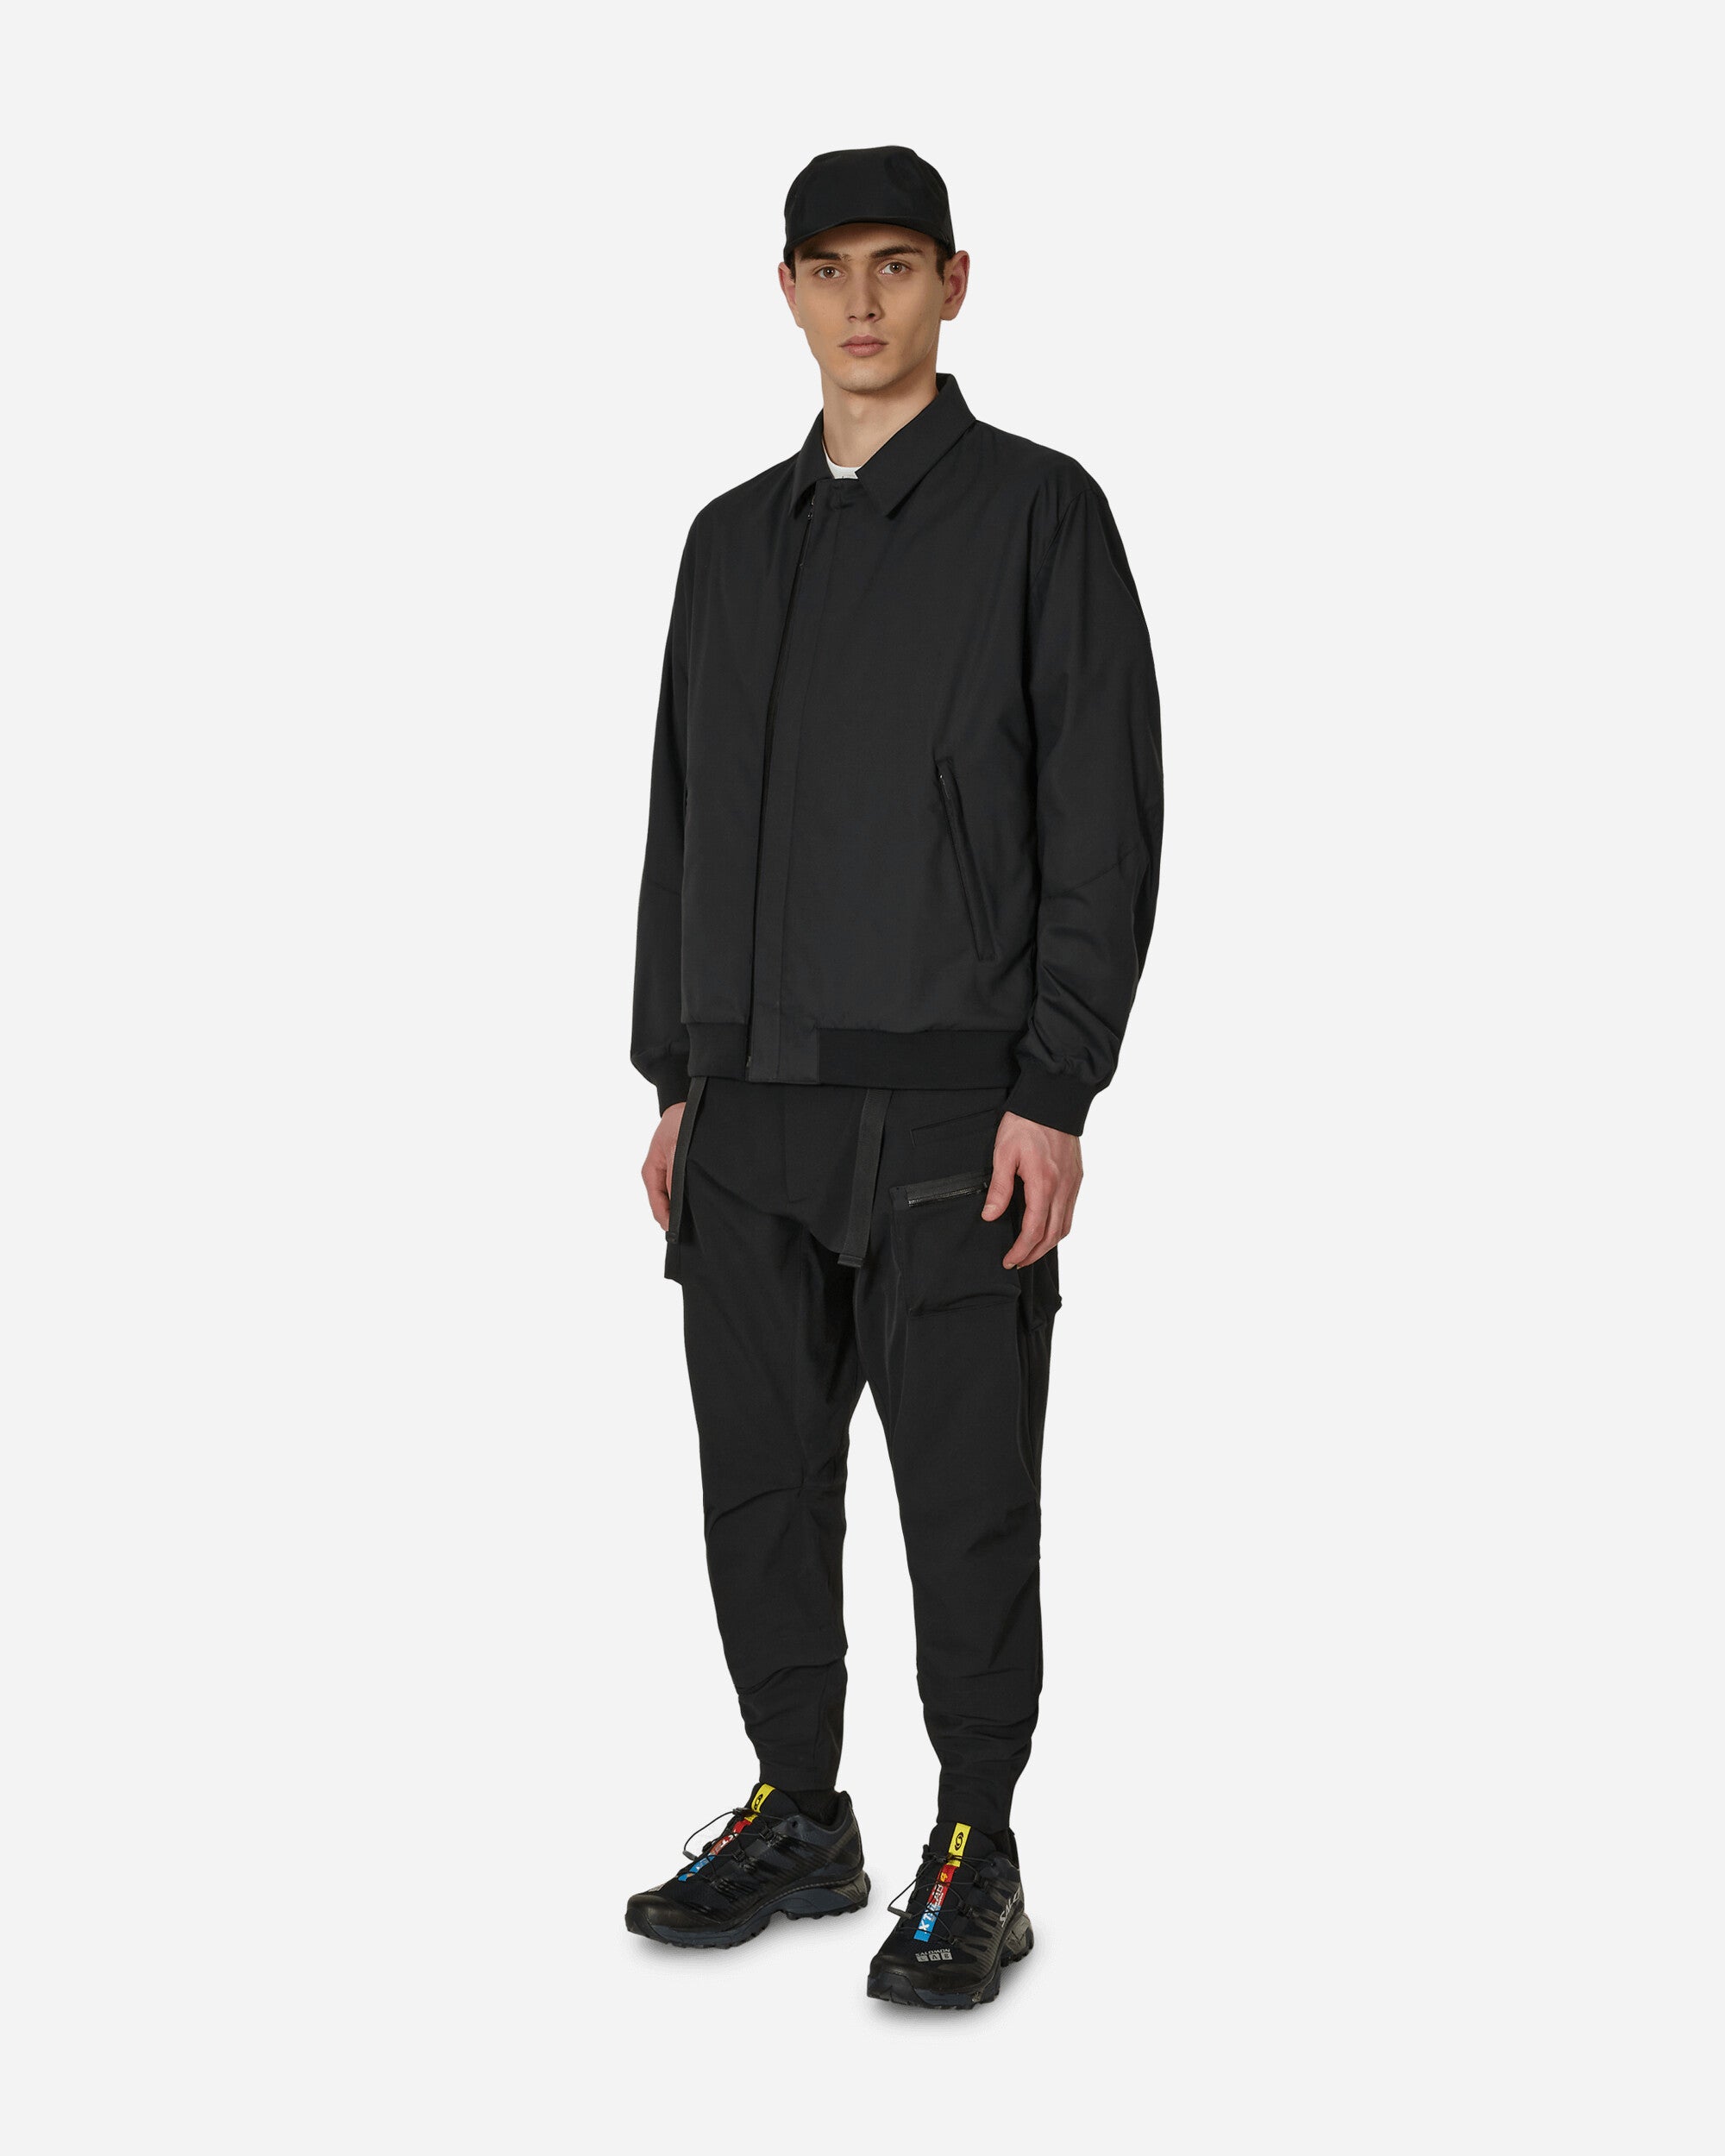 Acronym Jackets Black Coats and Jackets Jackets J111TS-CH BLACK